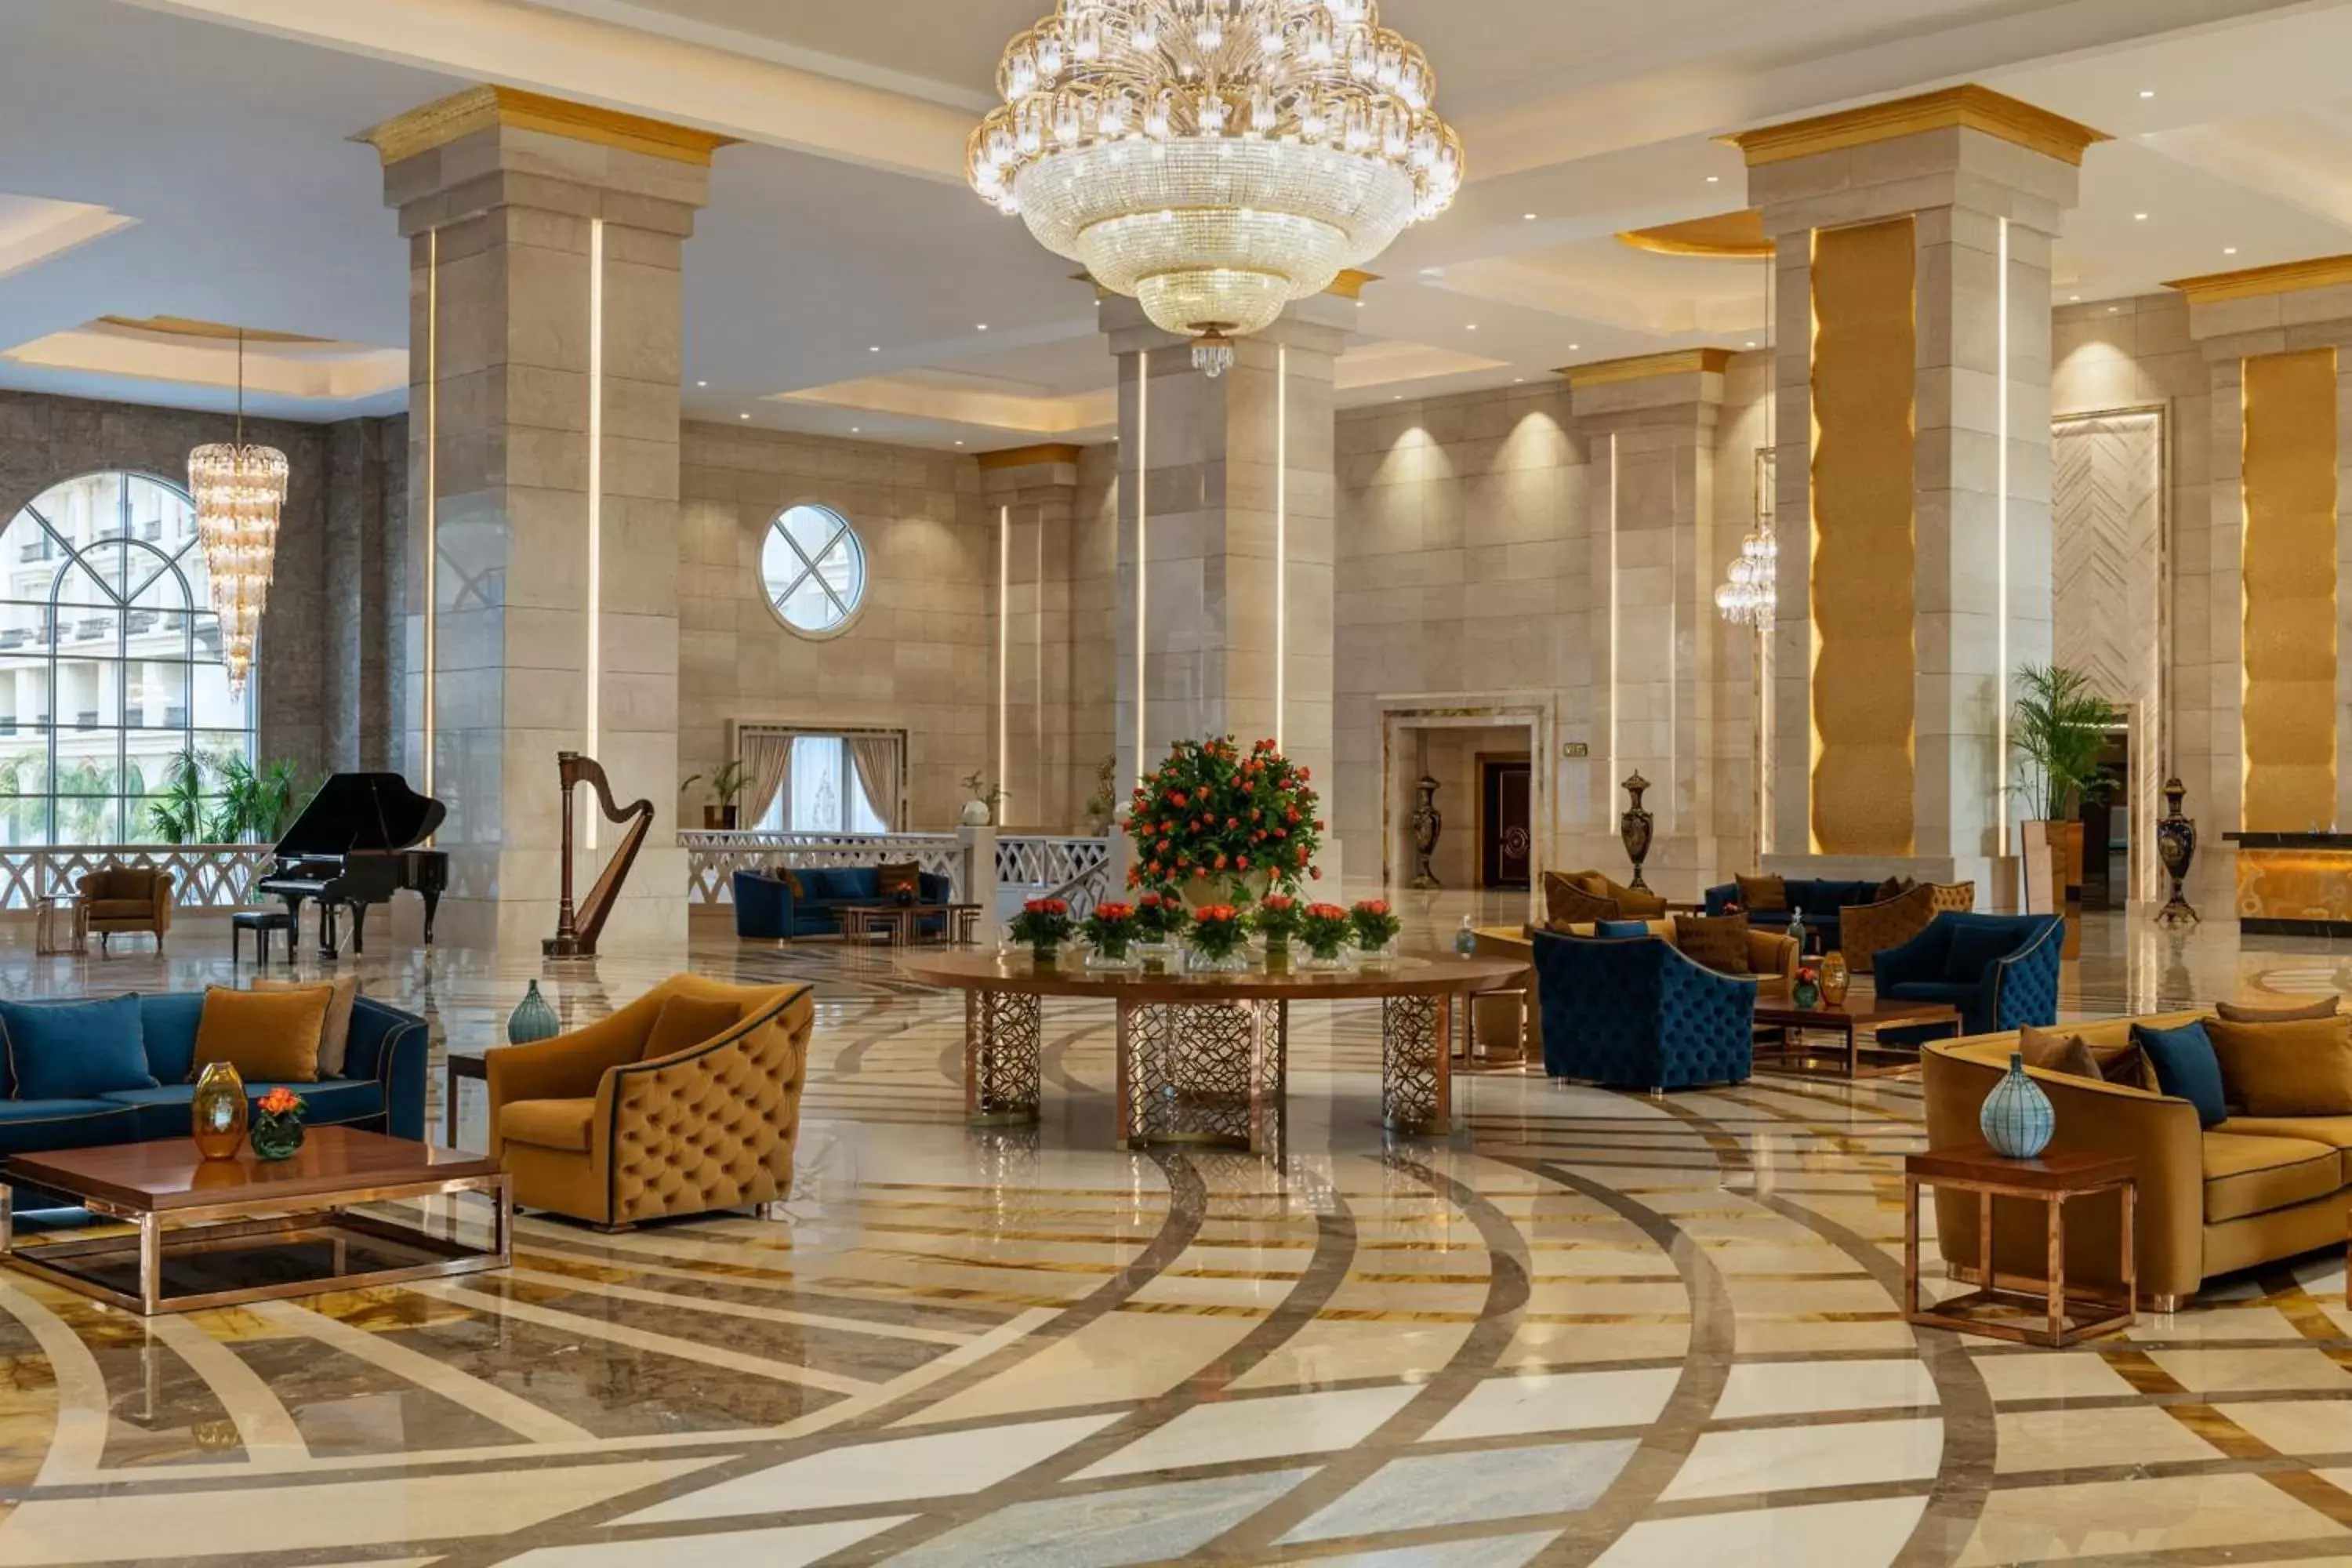 Lobby or reception, Lobby/Reception in The St. Regis Almasa Hotel, Cairo